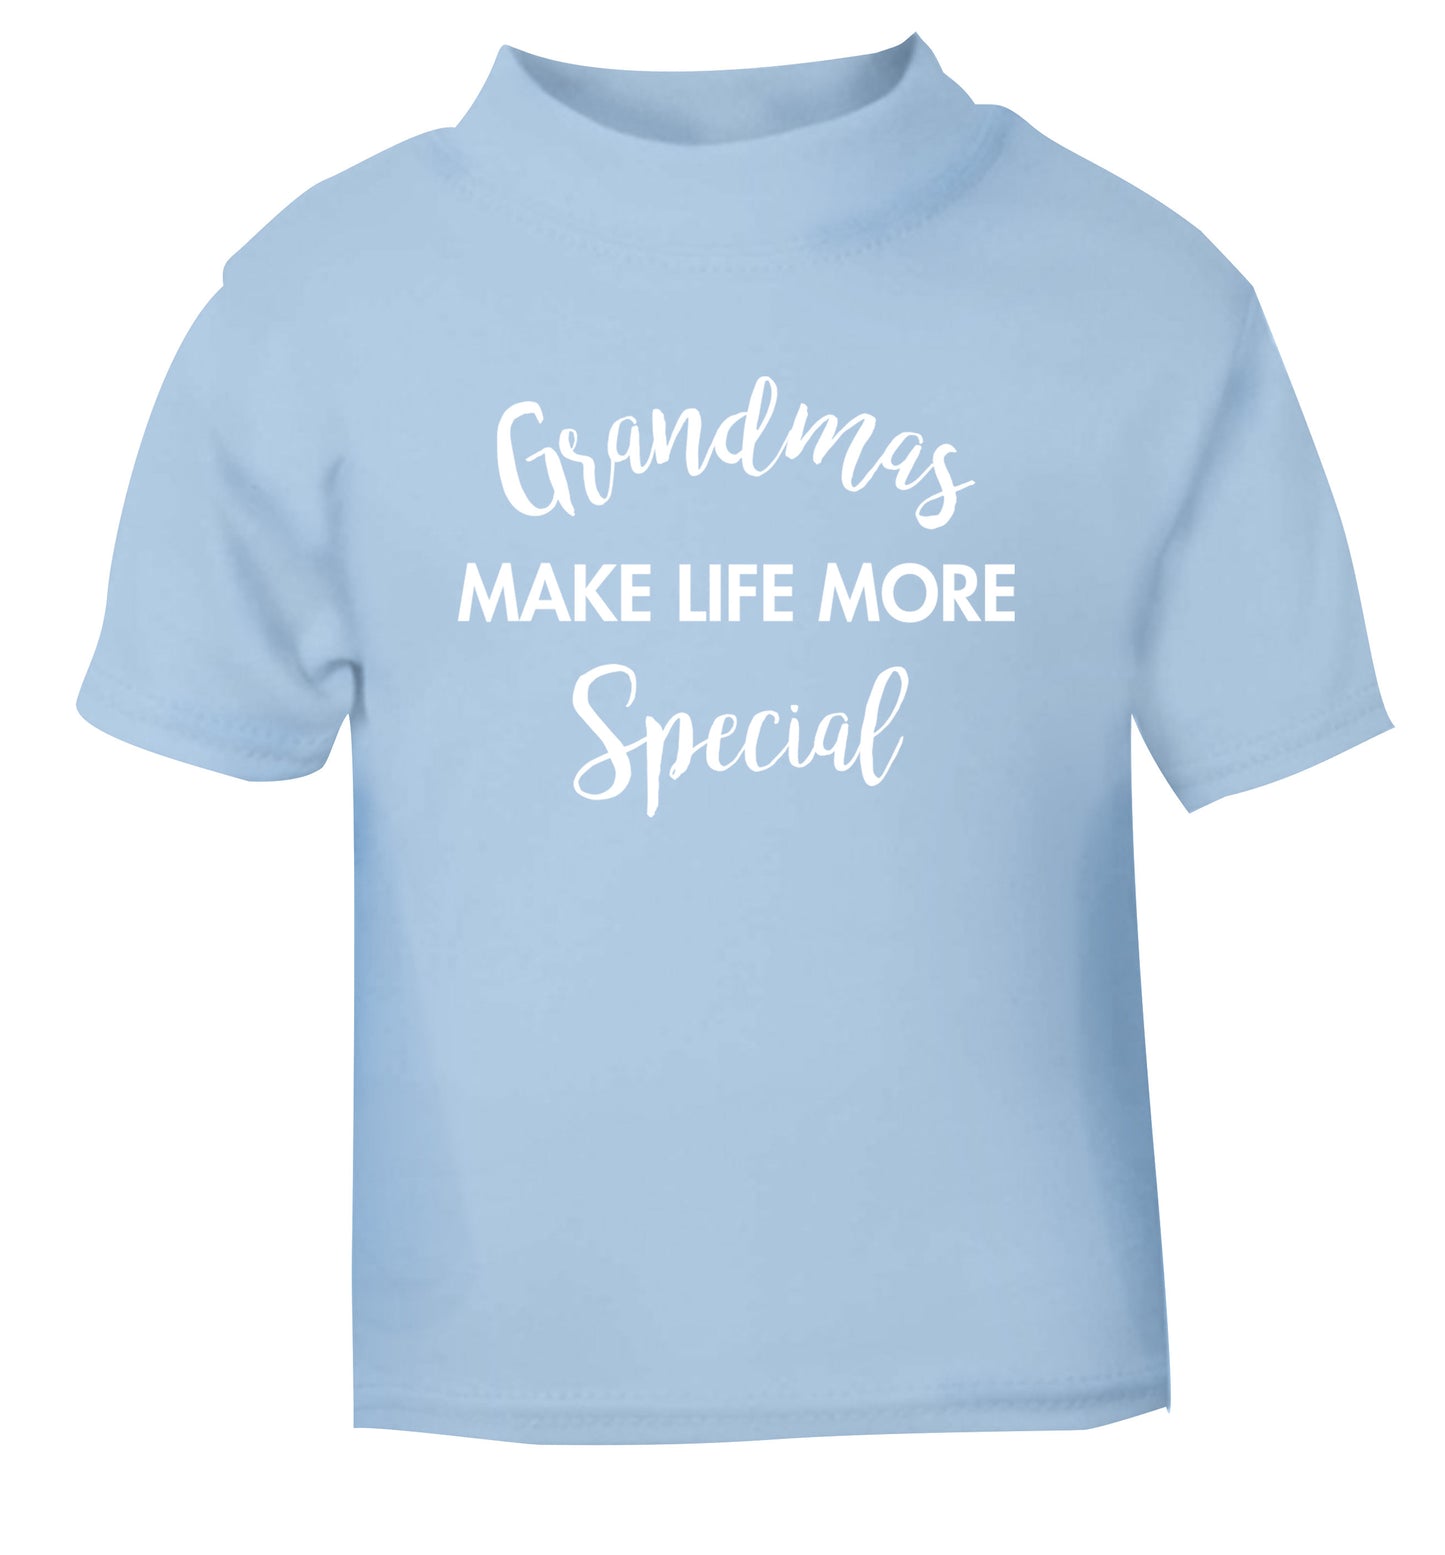 Grandmas make life more special light blue Baby Toddler Tshirt 2 Years